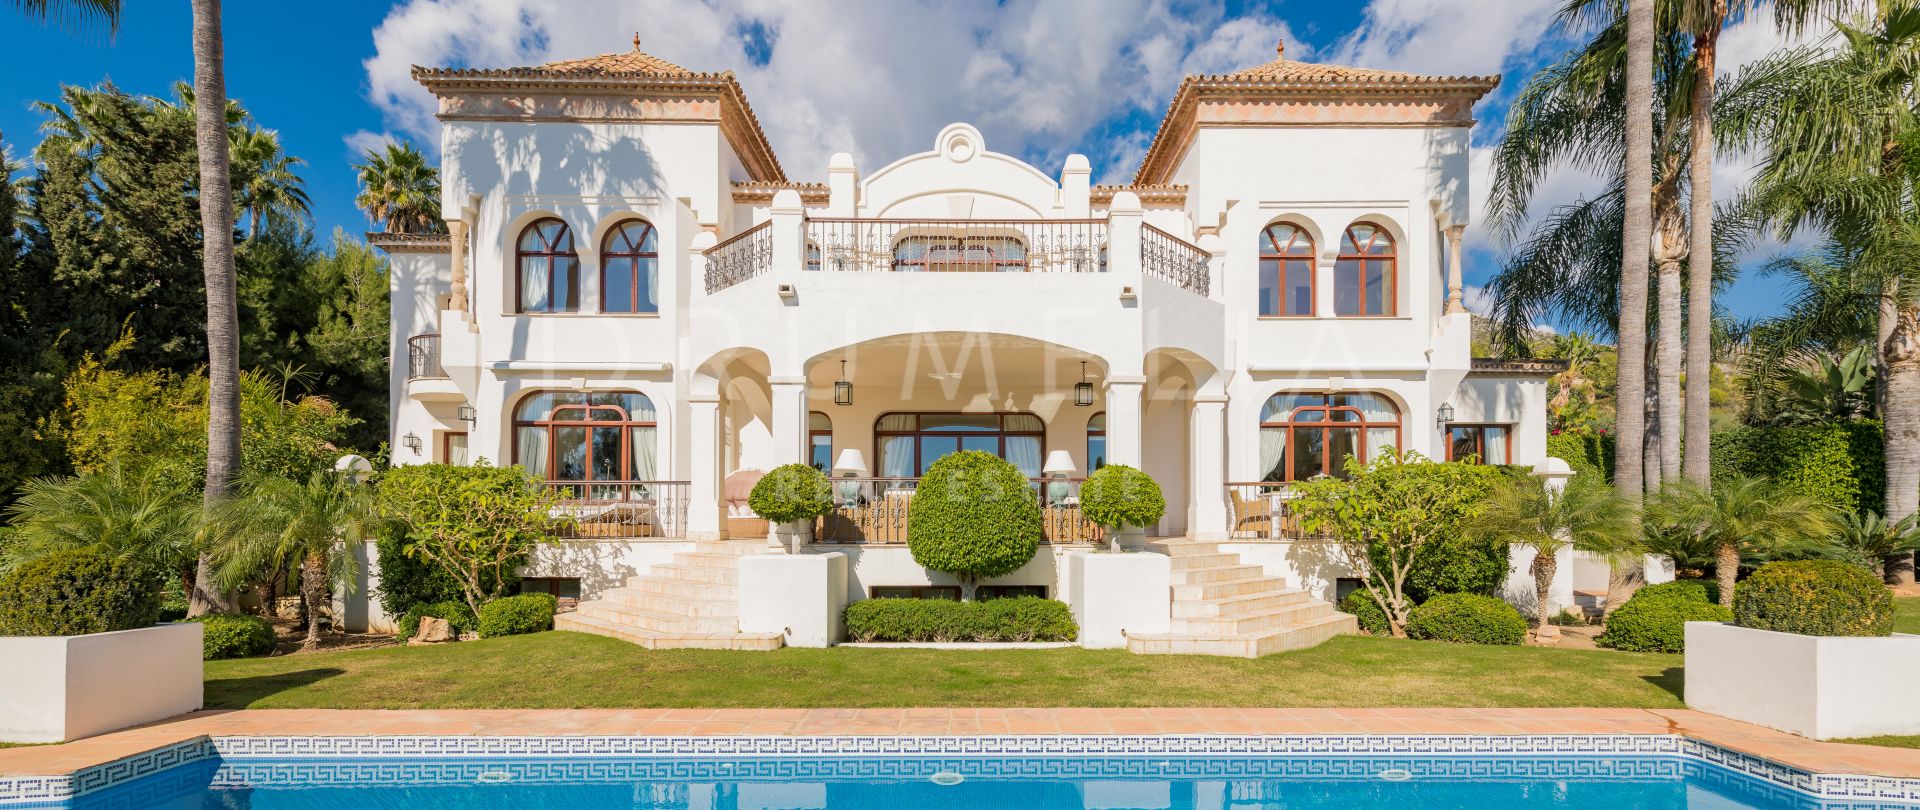 Villa for salg i Sierra Blanca, Marbella Golden Mile